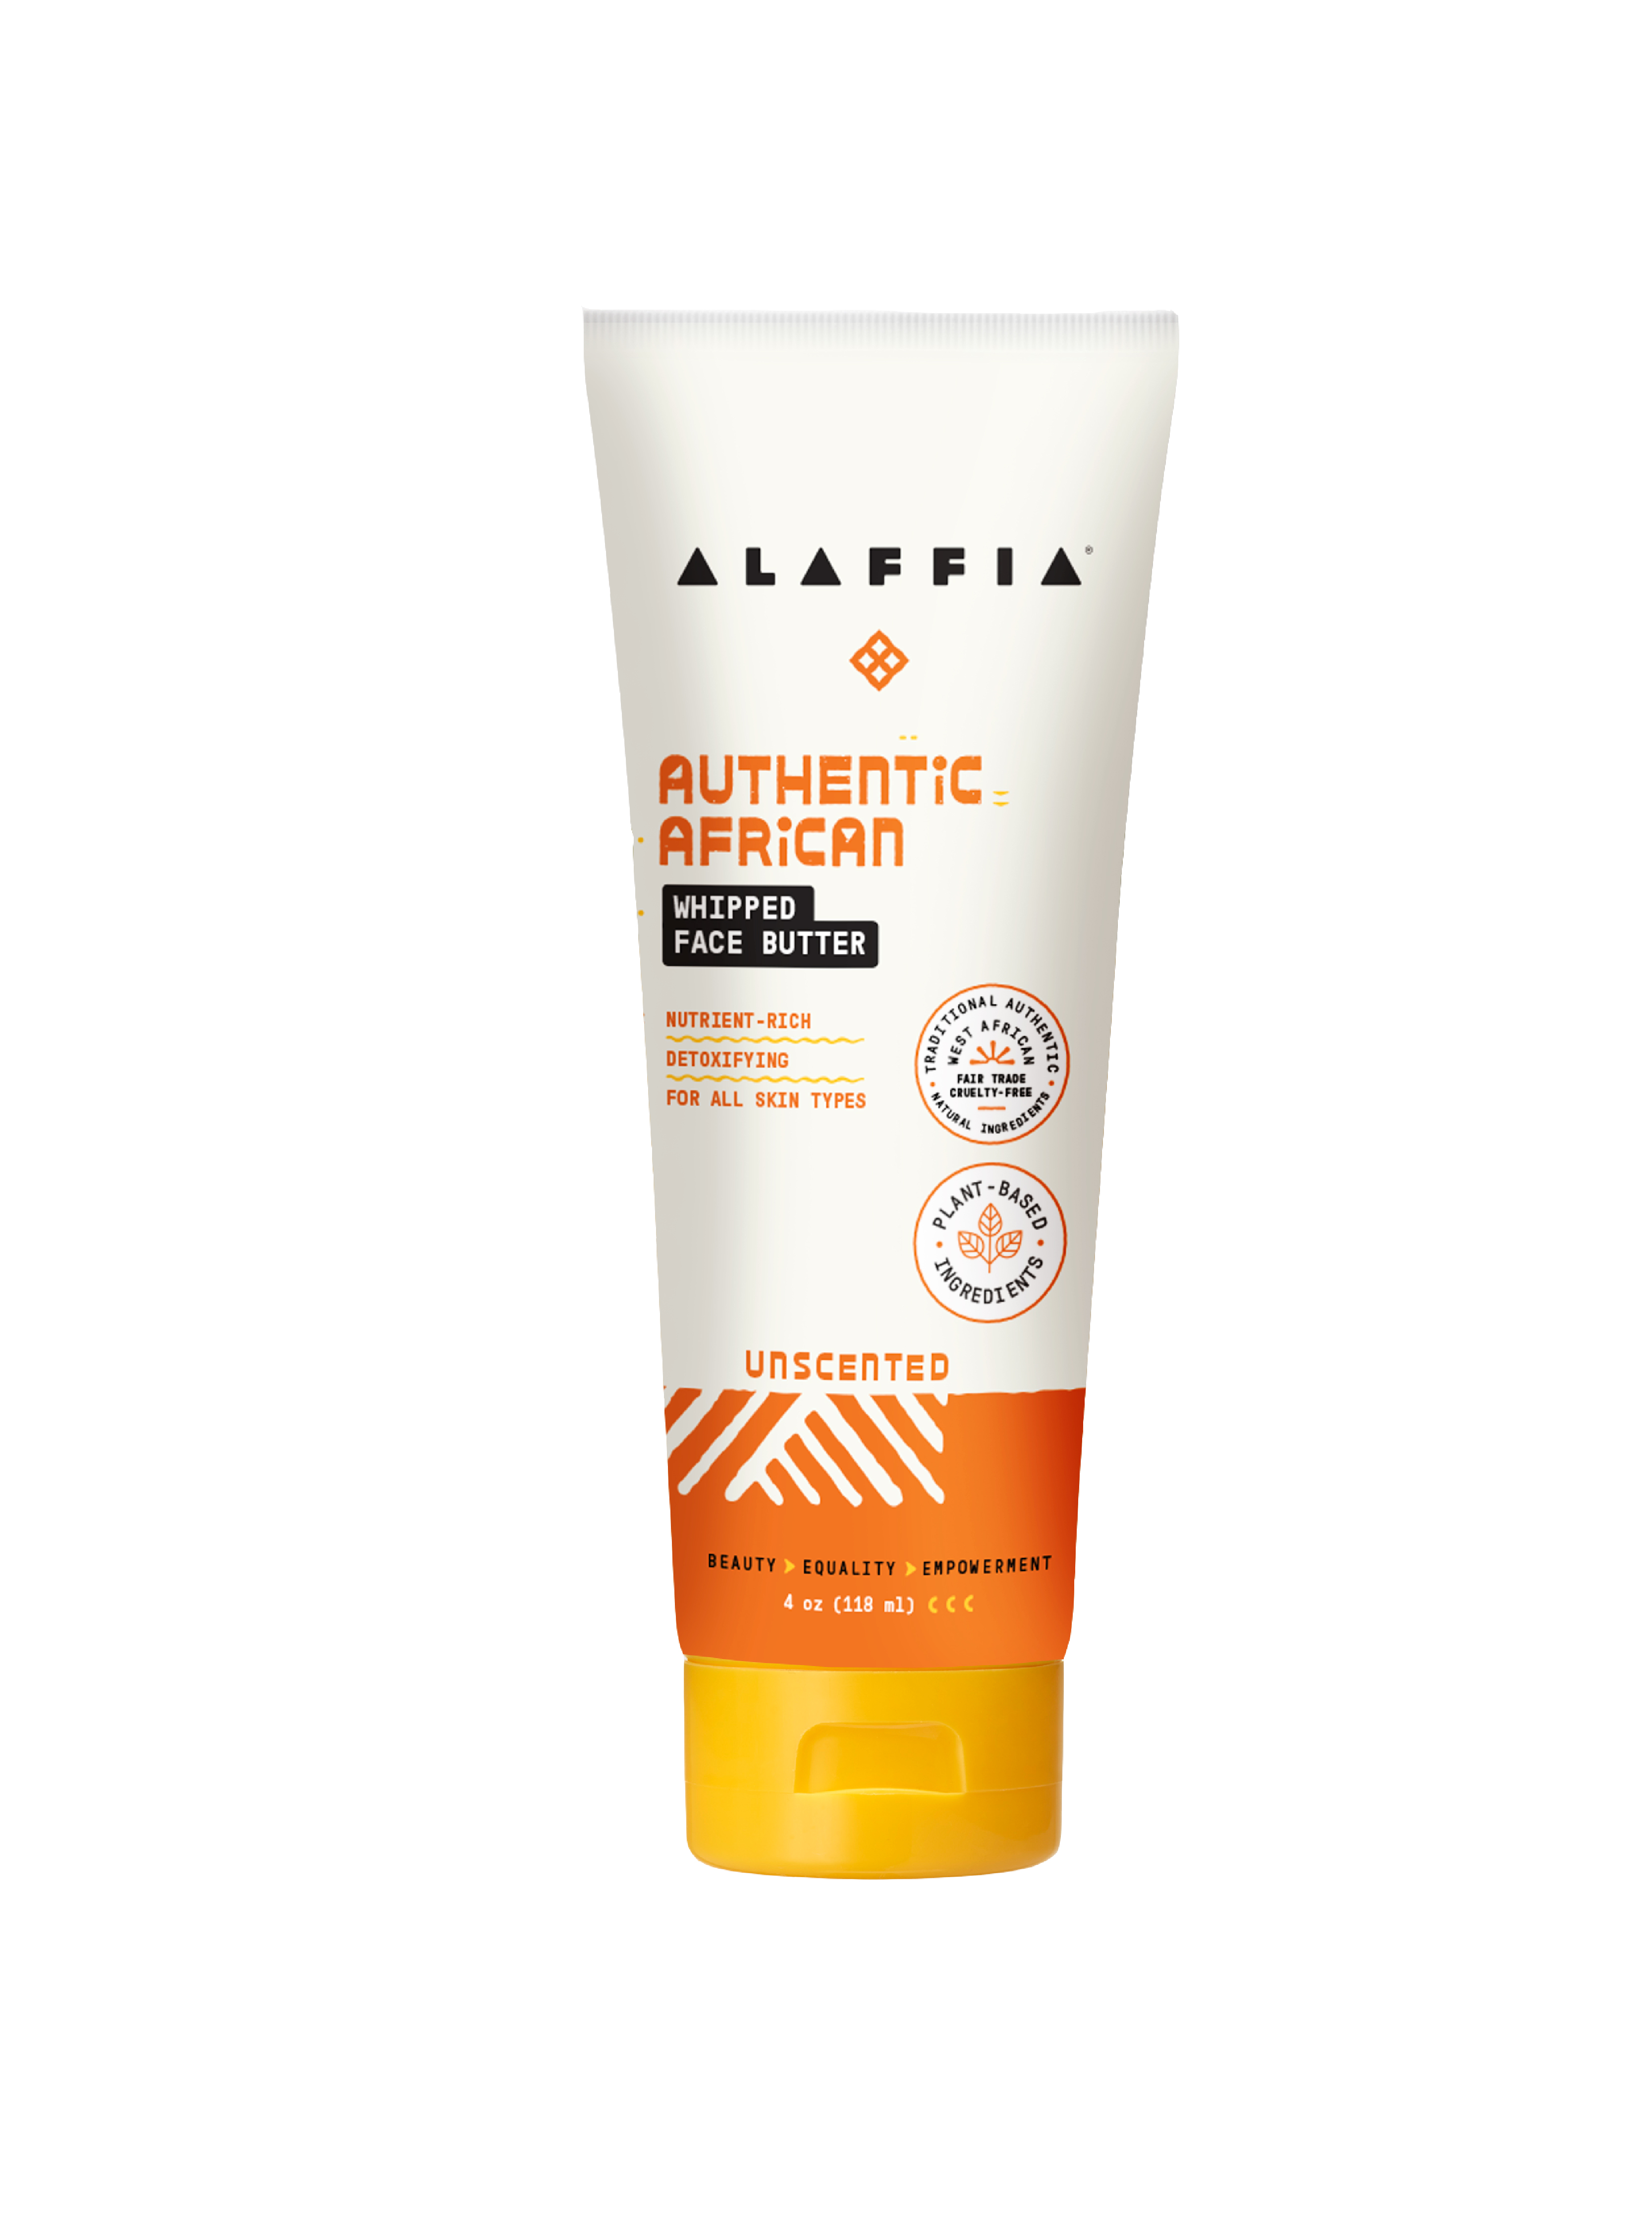 Alaffia Authentic African Whipped Shea Face Moisturizer Cream, 3.4 oz - image 1 of 7